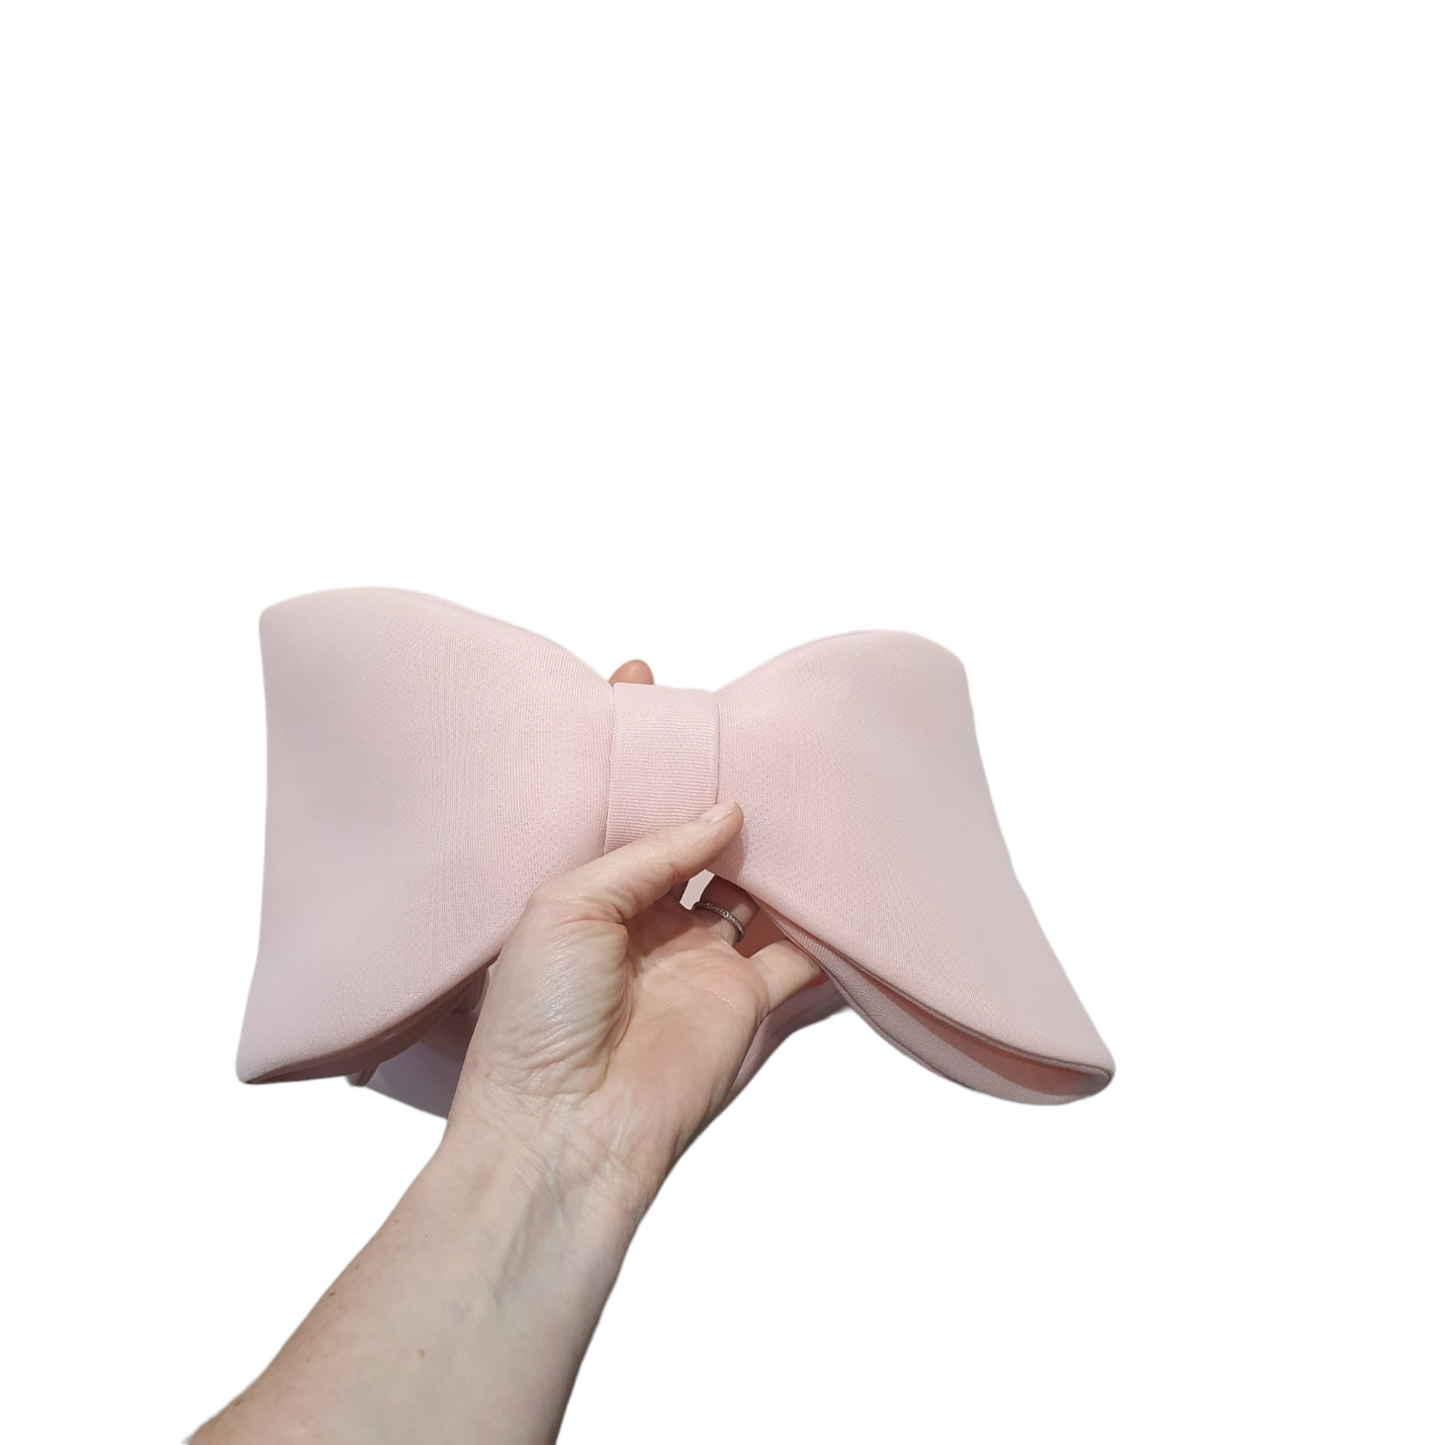 Simone Rocha/H&M collab Baby pink oversized bag